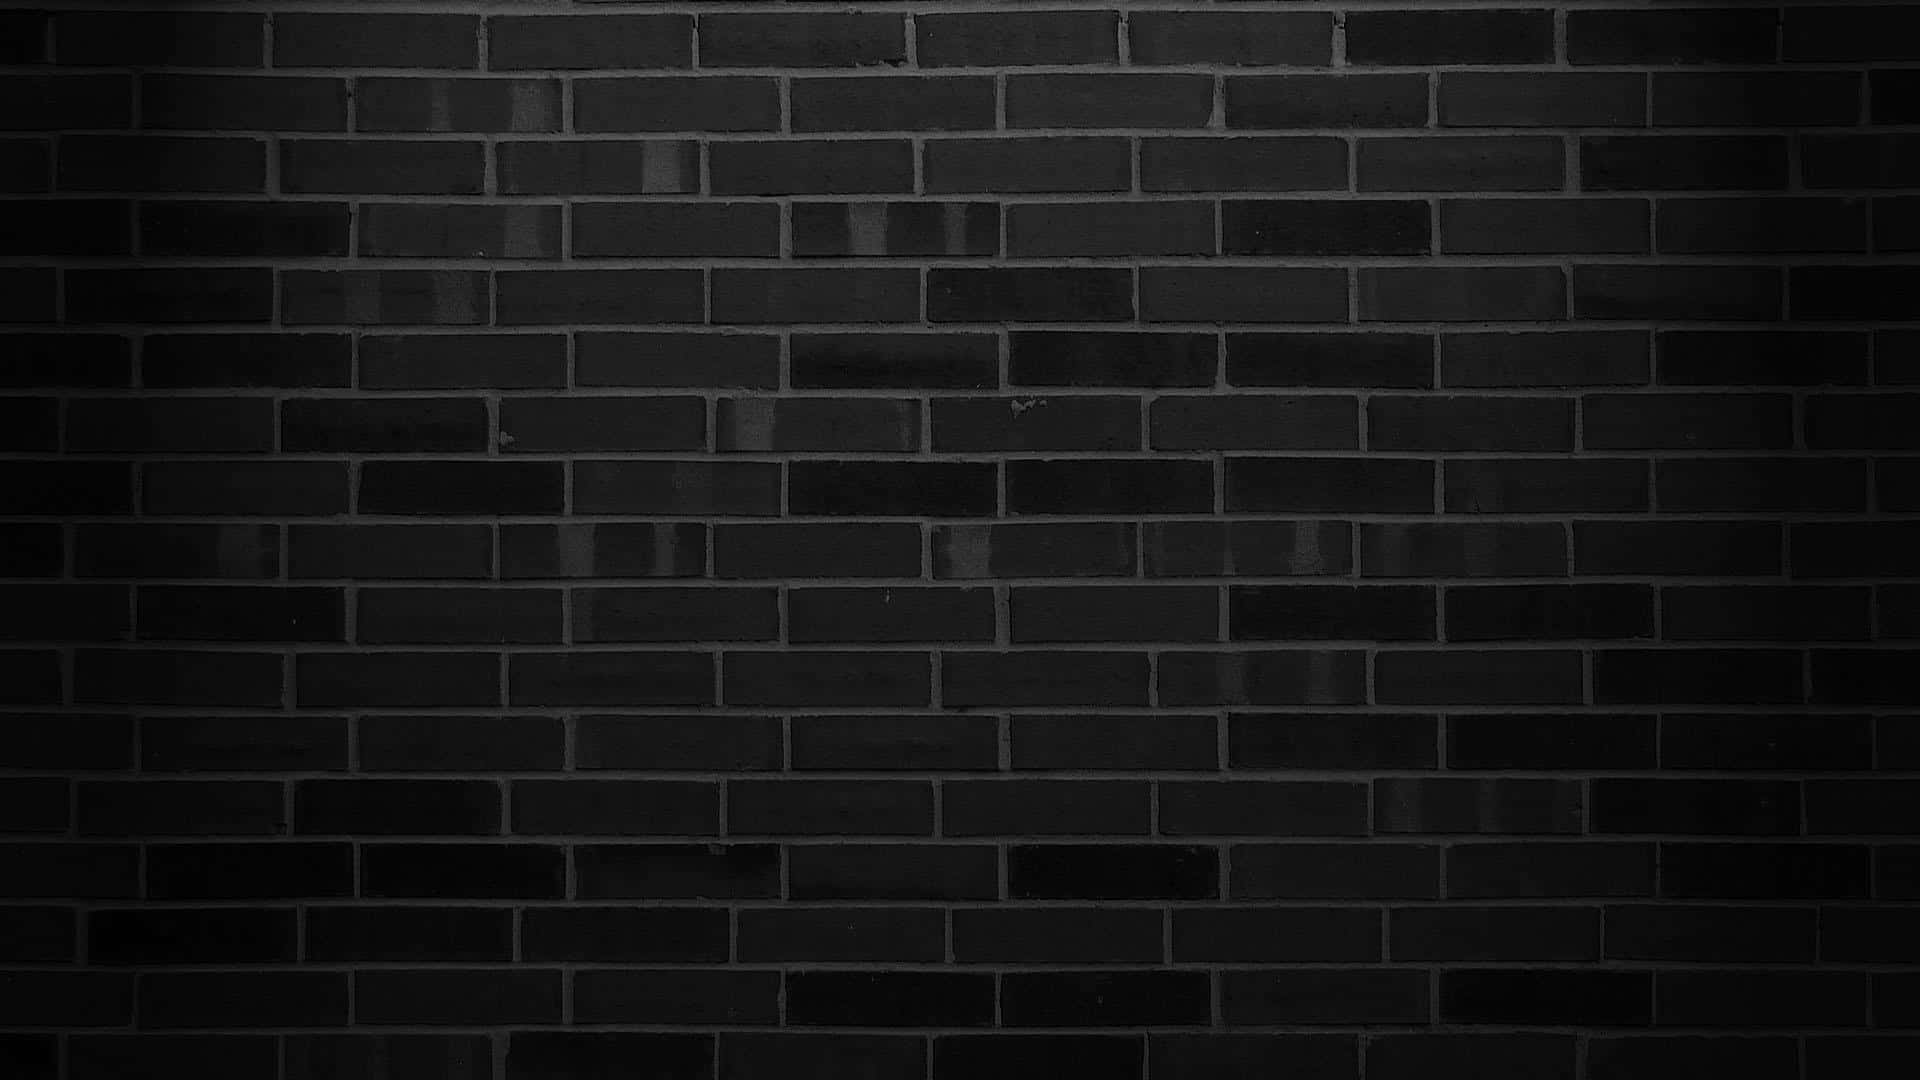 A black brick wall with a unique texture